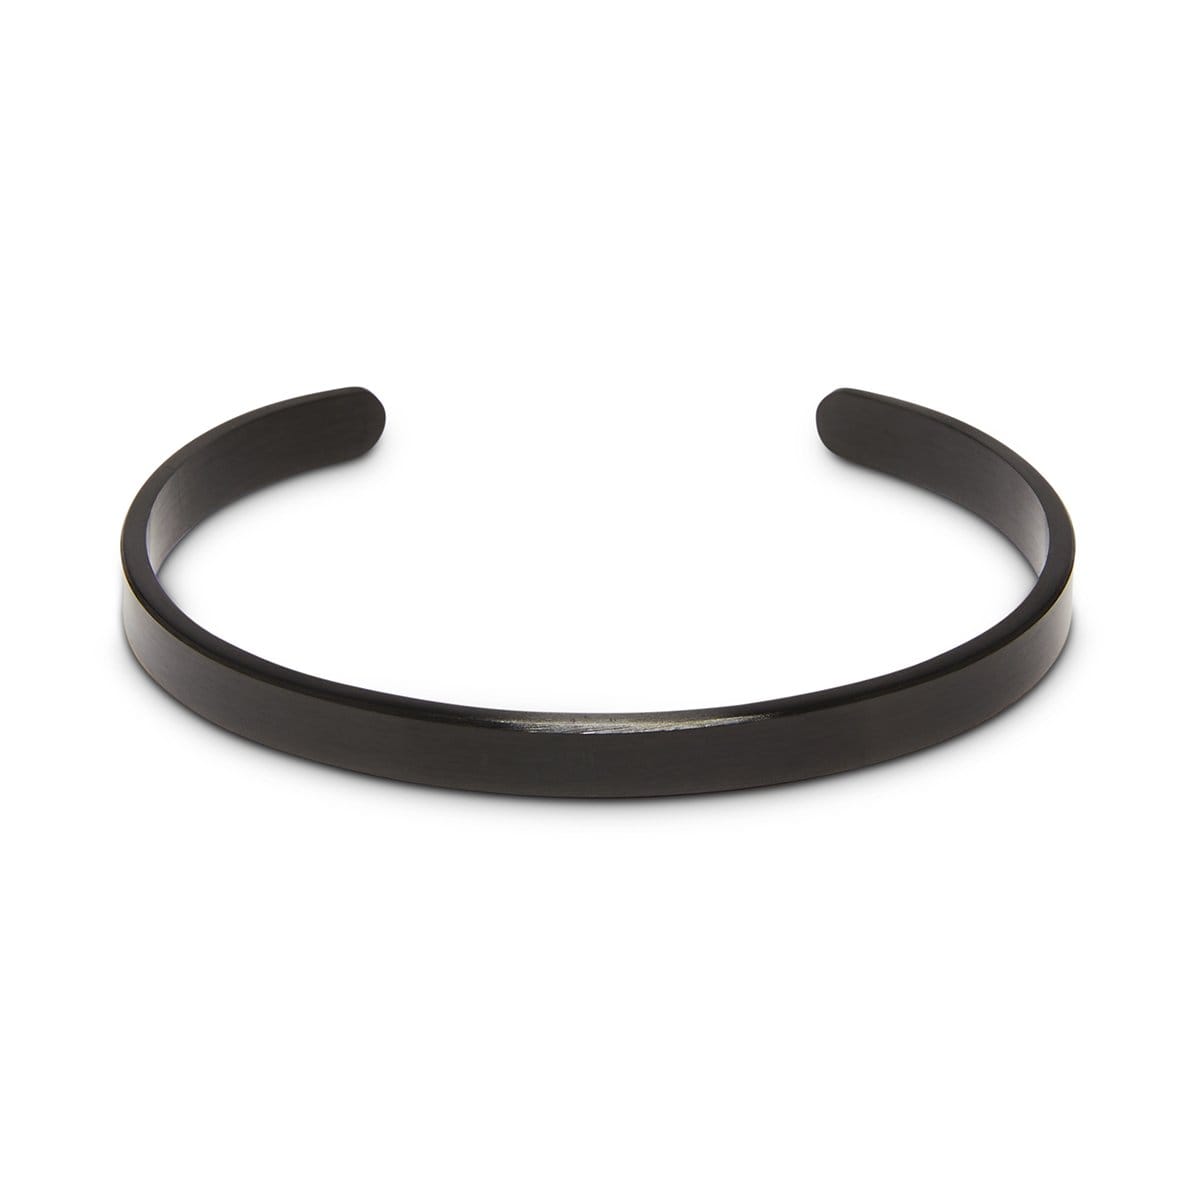 Ethnic style cuff bracelet, ceramic bar beads, black color, small size :  Amazon.co.uk: Handmade Products